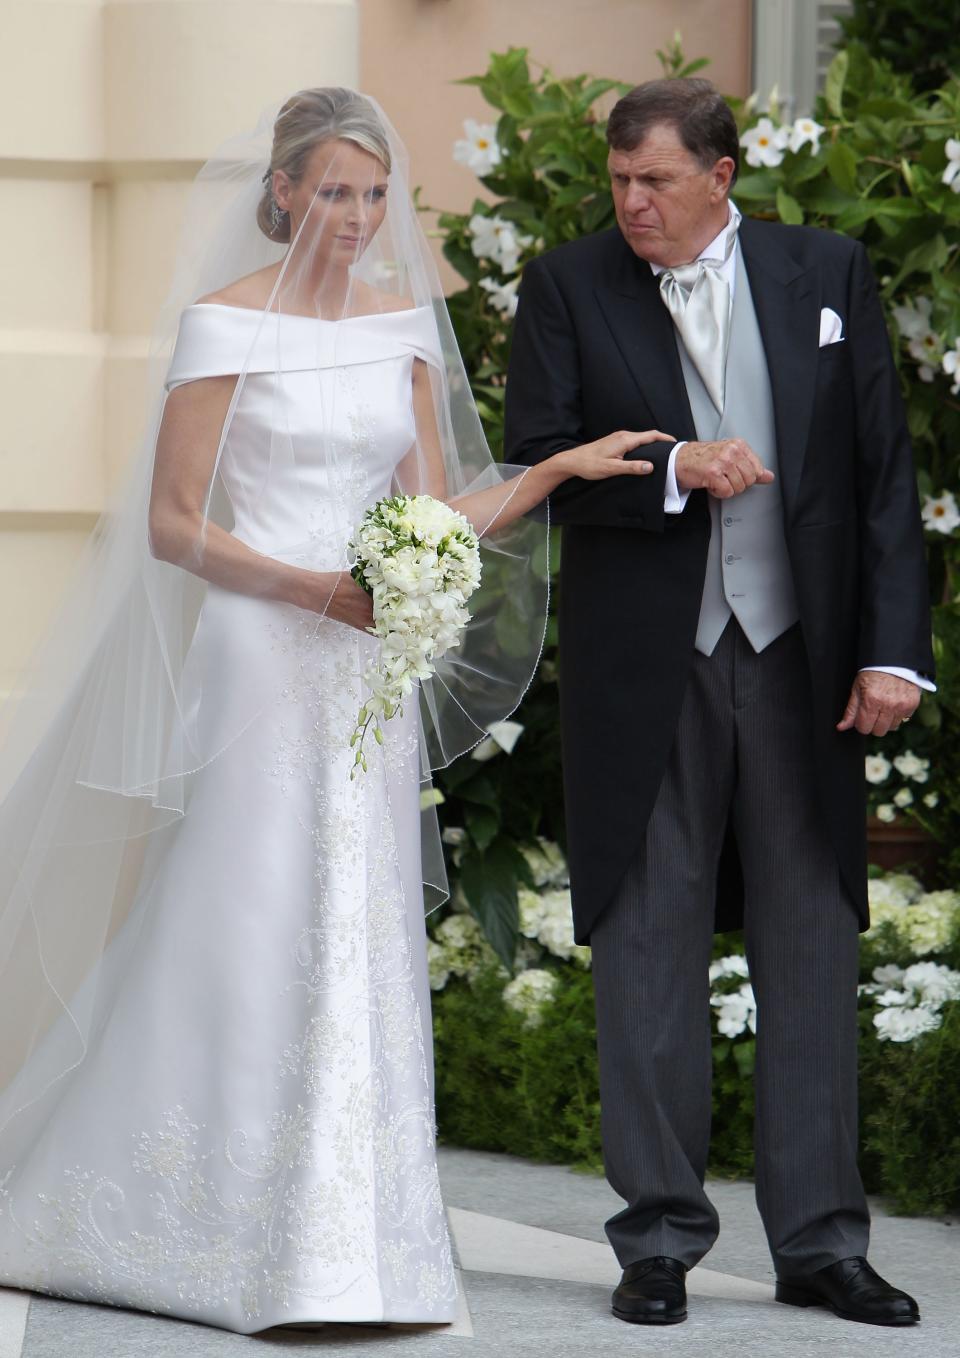 Princess Charlene of Monaco on her wedding day.